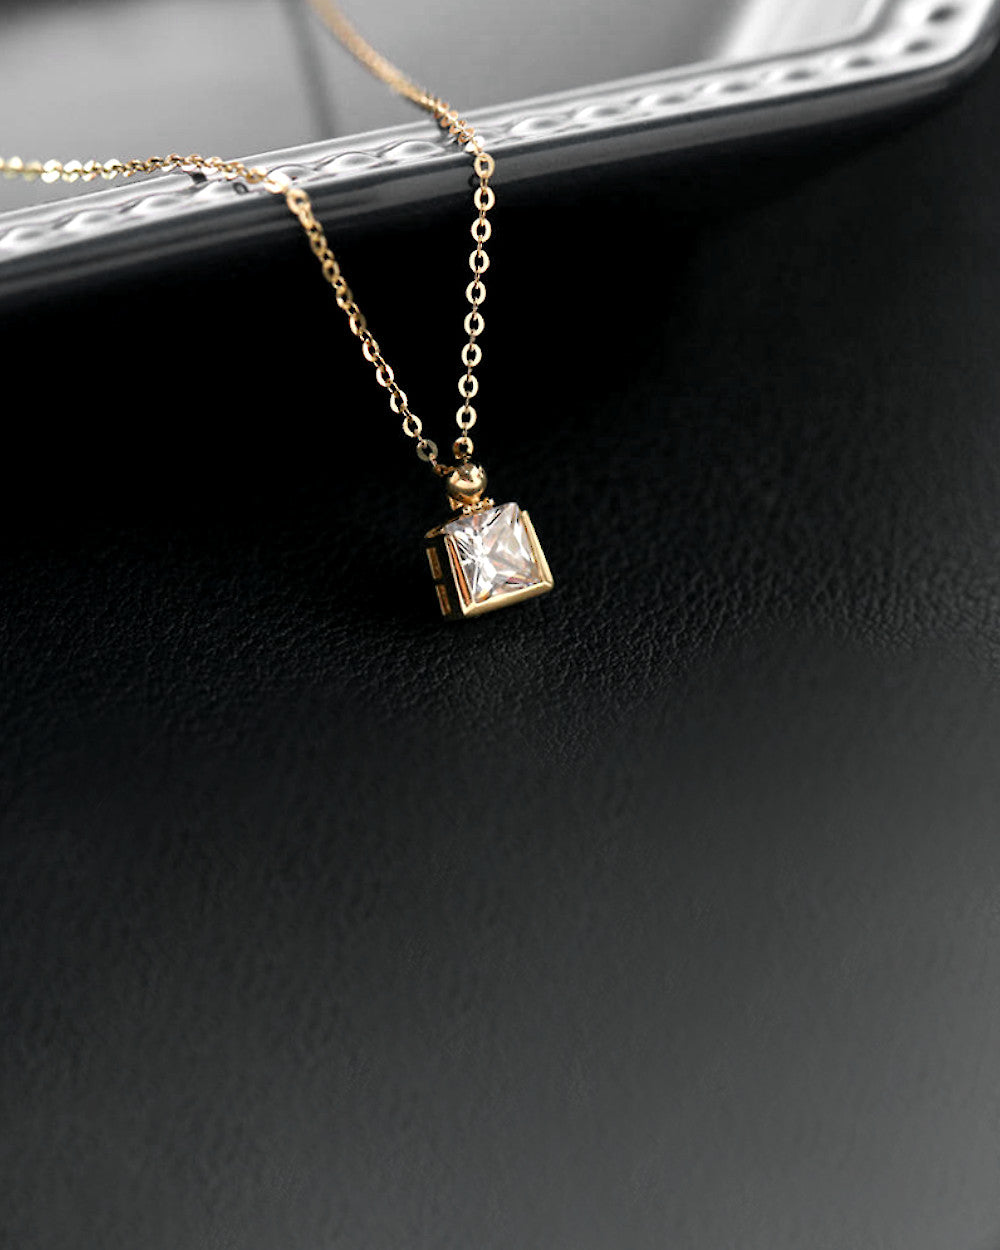 Damen Halskette Silber 925 vergoldet Anhänger Kristall Quadrat 'Talia', 45cm filigrane Silberkette goldener Anhänger Stein klein dünne Kette CLIFFORD